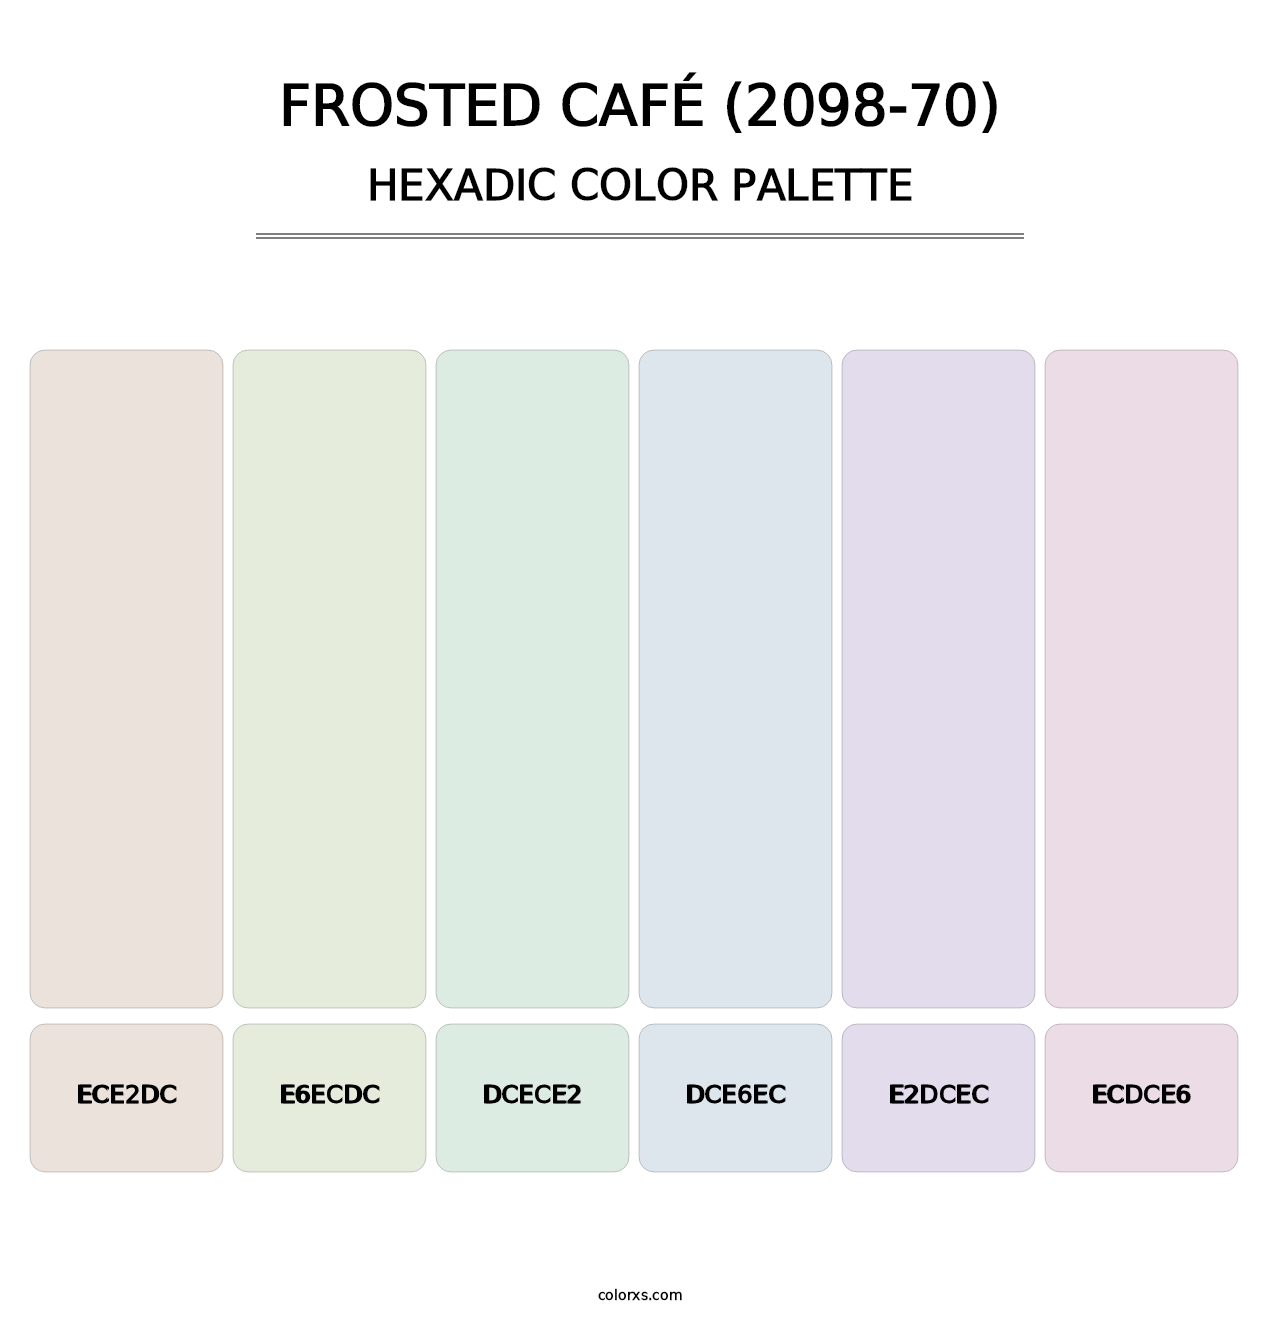 Frosted Café (2098-70) - Hexadic Color Palette